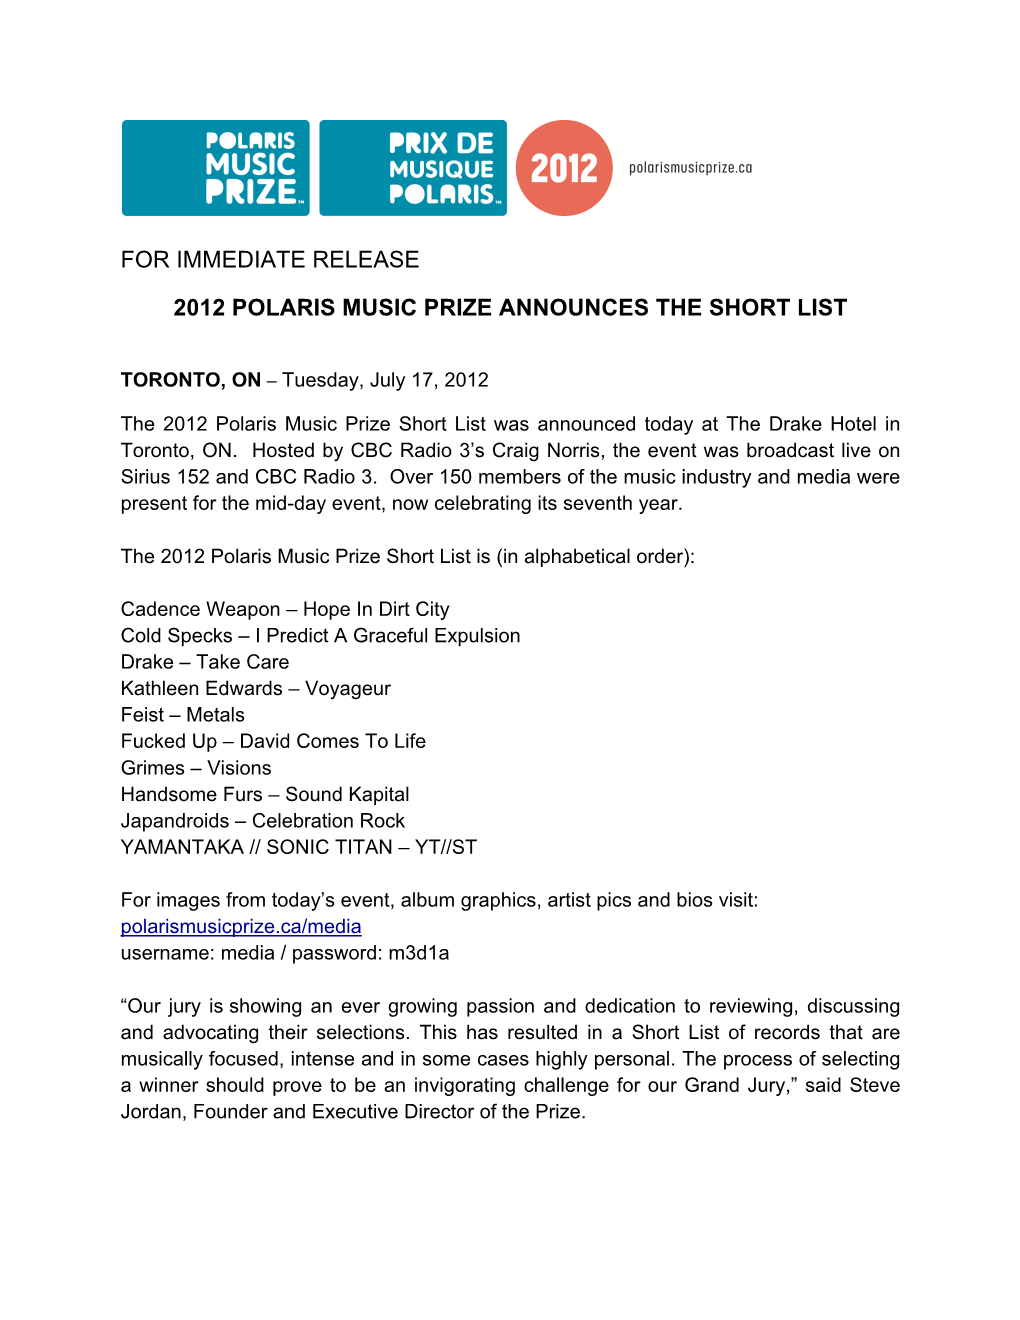 For Immediate Release 2012 Polaris Music Prize Announces the Short List